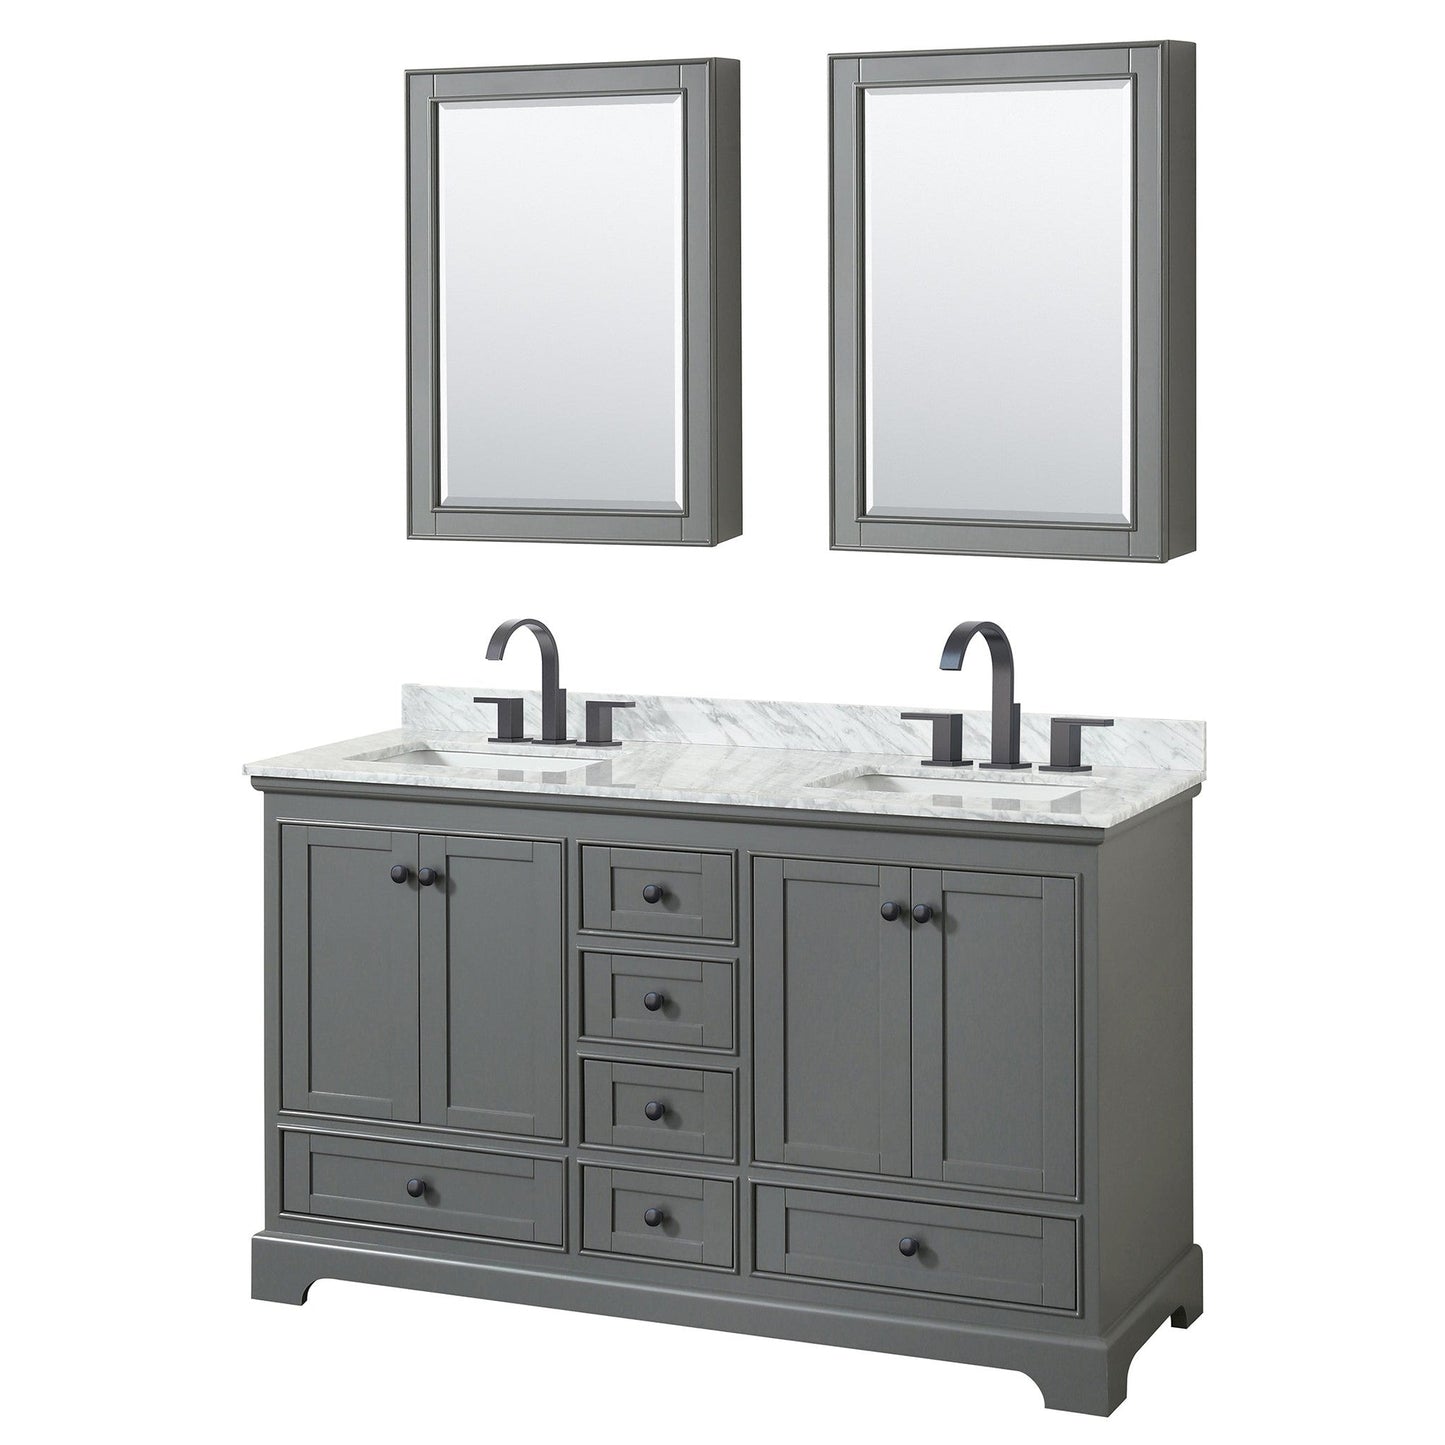 Deborah 60" Double Bathroom Vanity in Dark Gray, White Carrara Marble Countertop, Undermount Square Sinks, Matte Black Trim, Medicine Cabinets